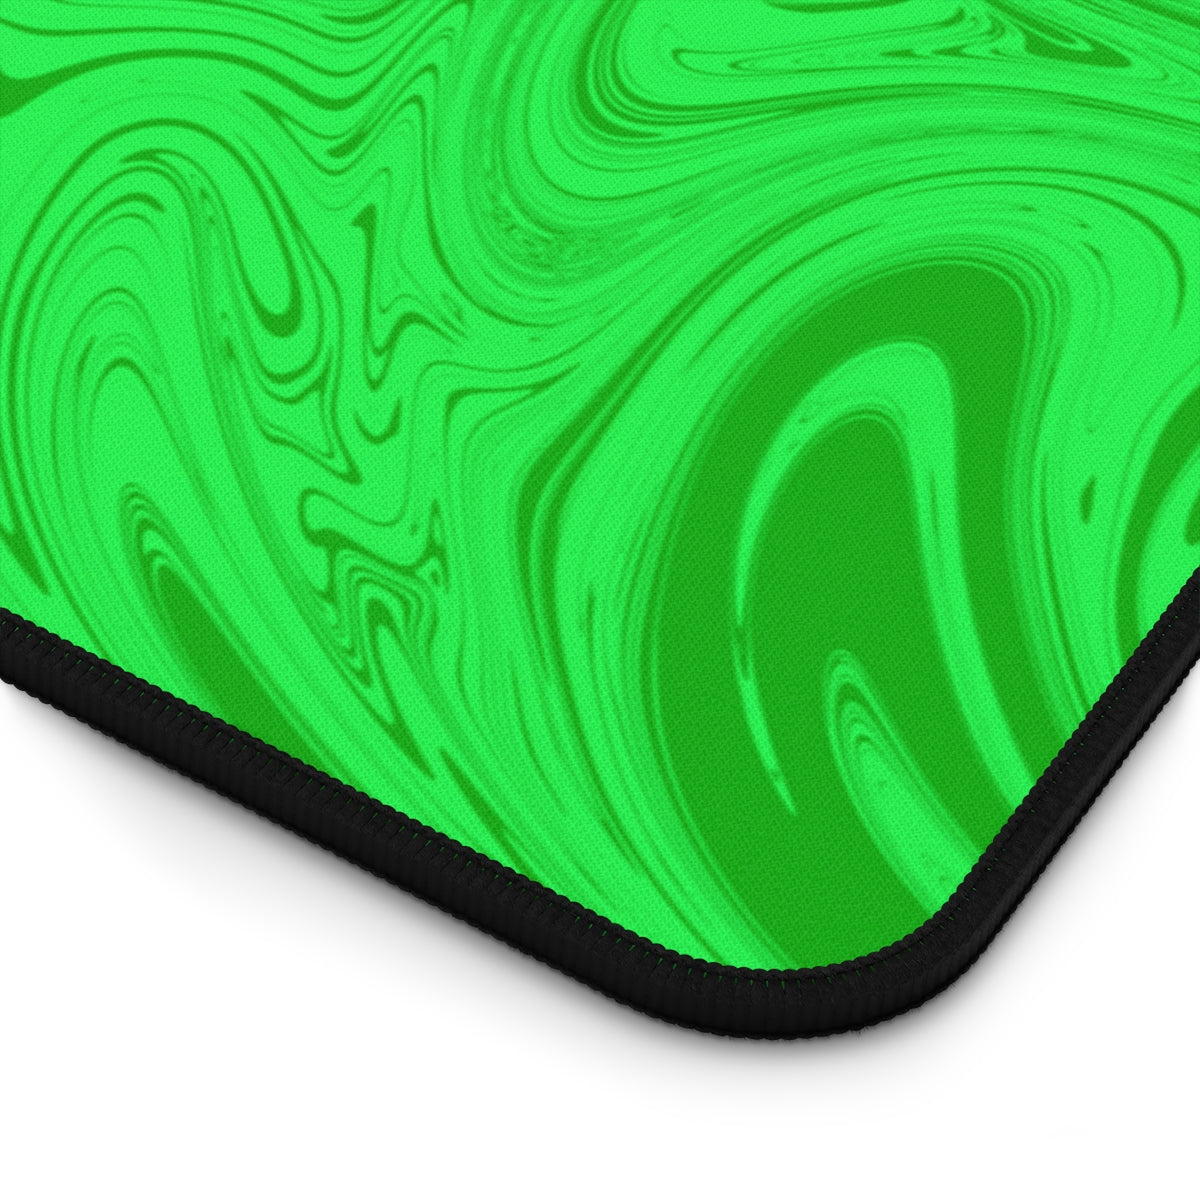 Green Swirl Desk Mat - Desk Cookies